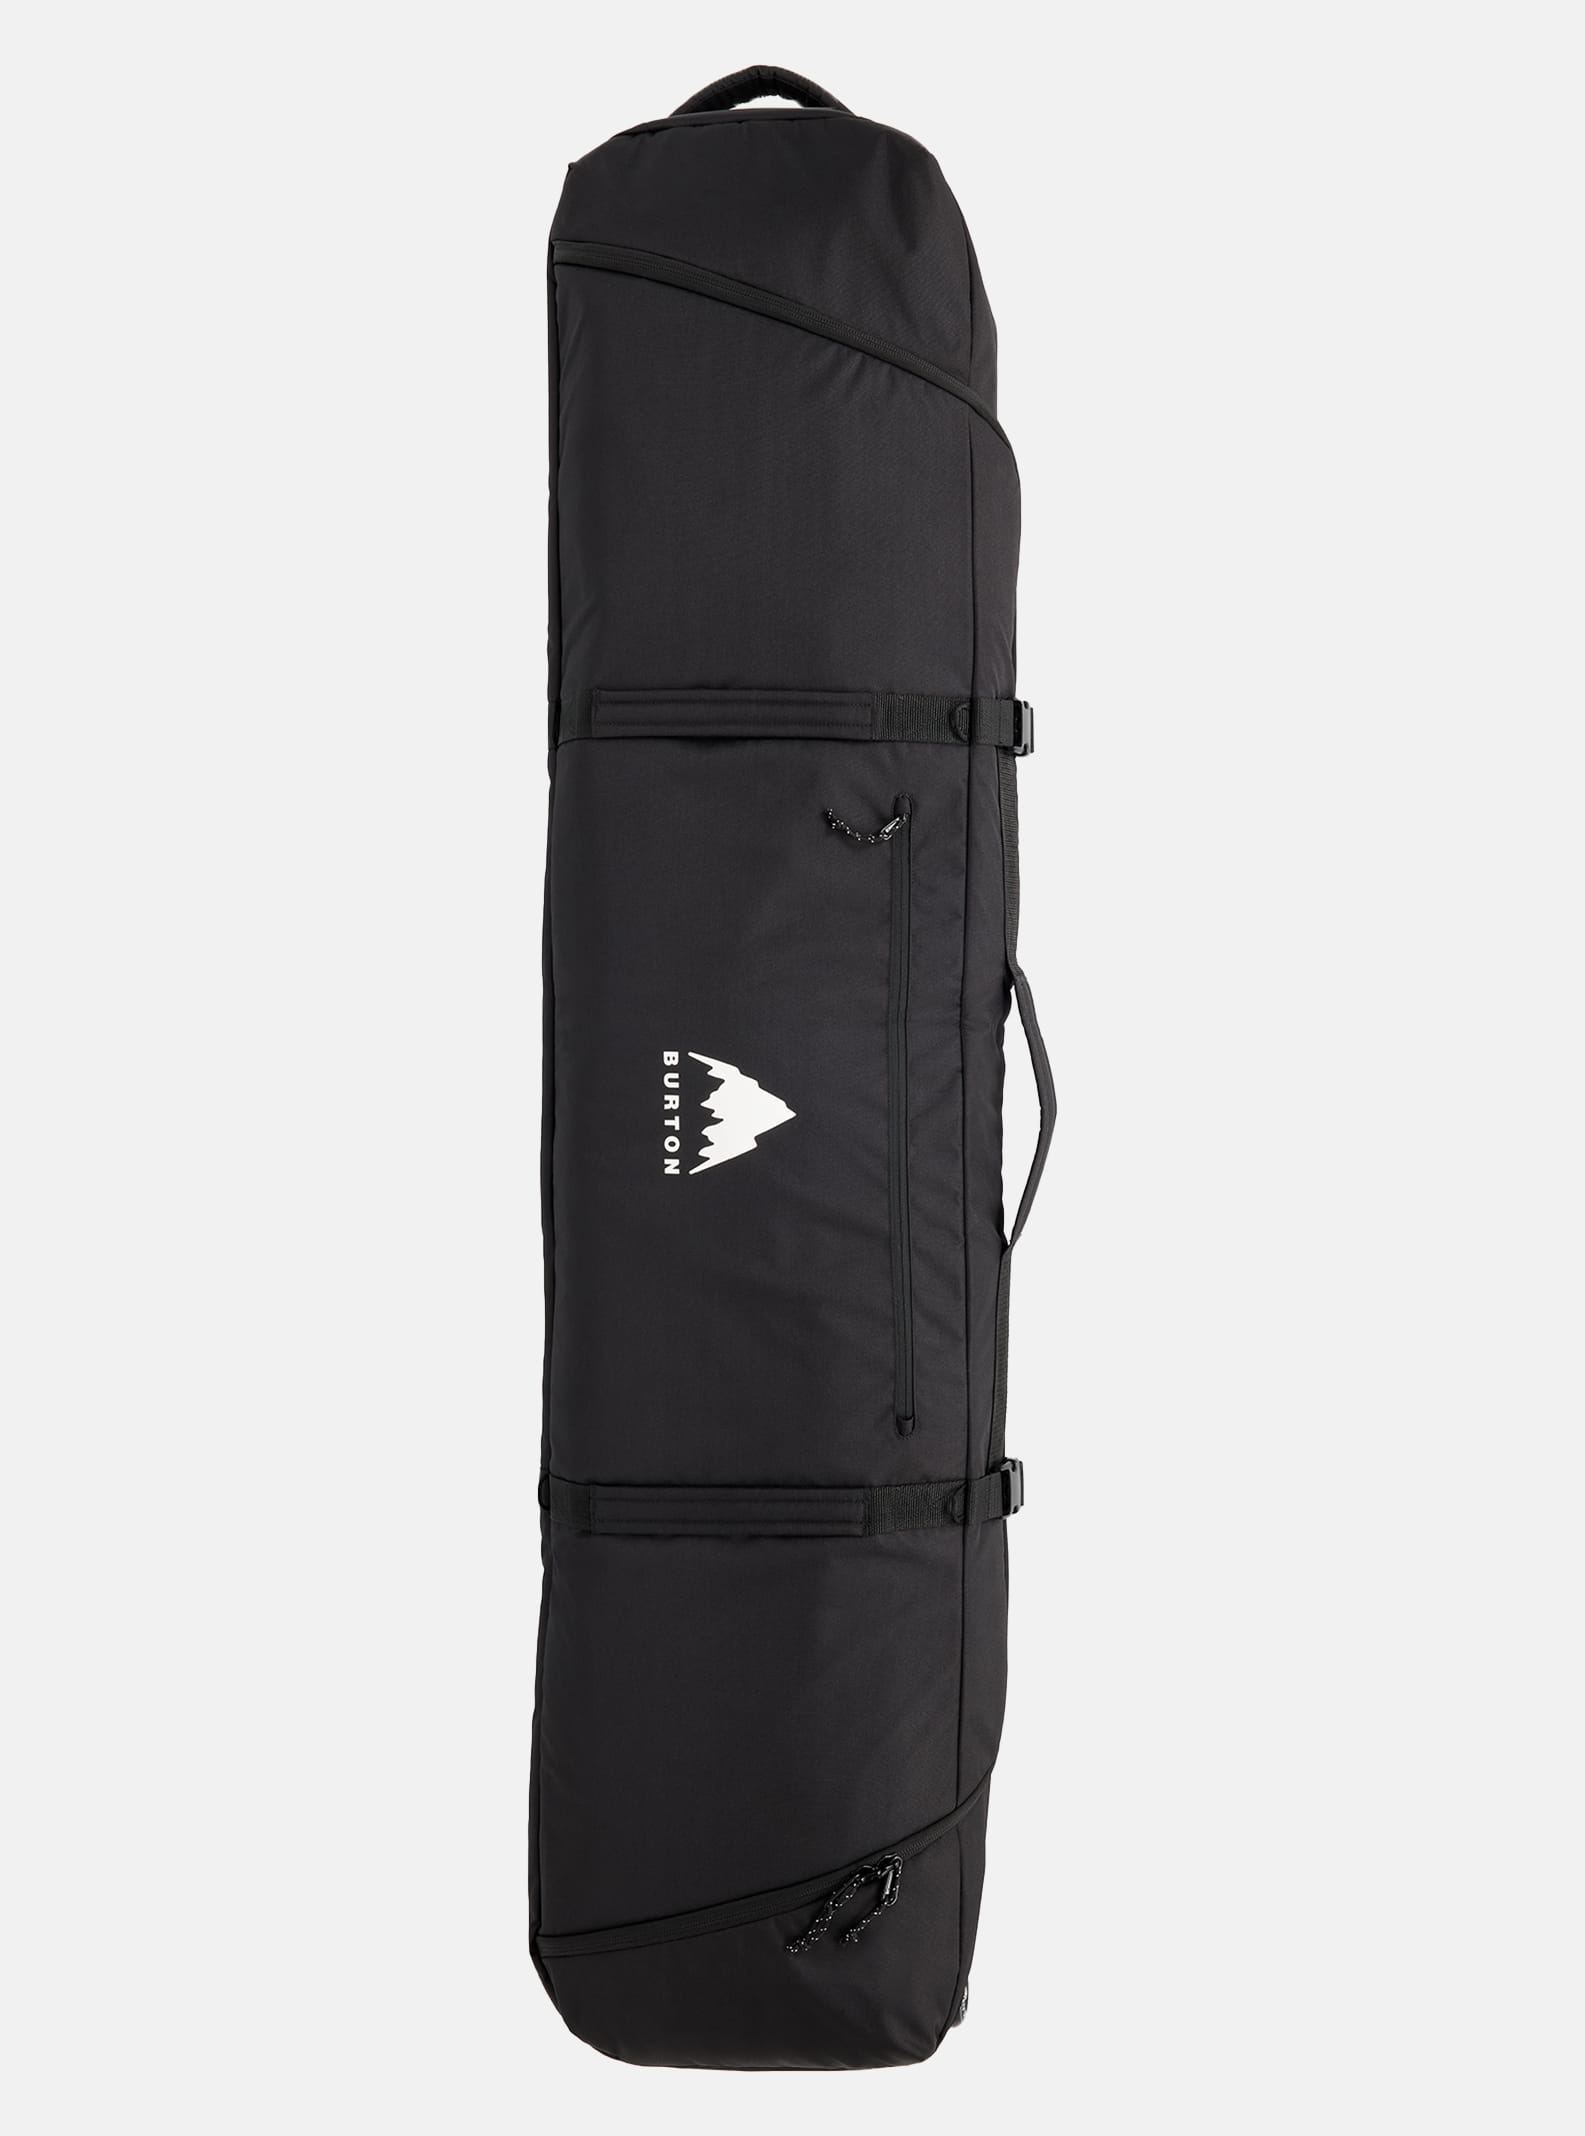 Ski Snowboard BOOTS Backpack Boot Bag Black Ship USA WSD 2019 for sale online 